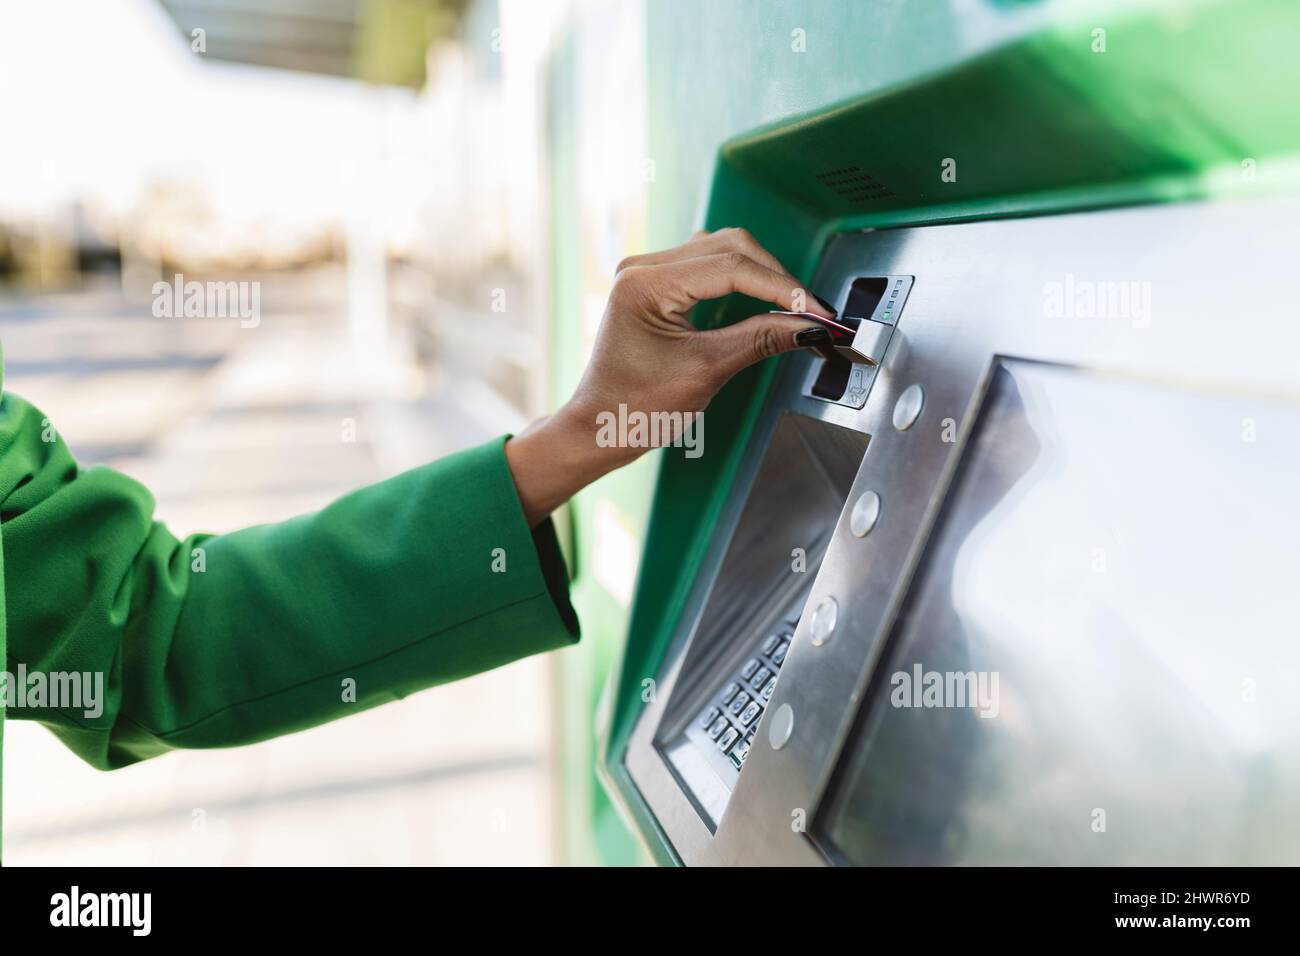 Businesswoman's hand inserting smart card in ticket machine Stock Photo